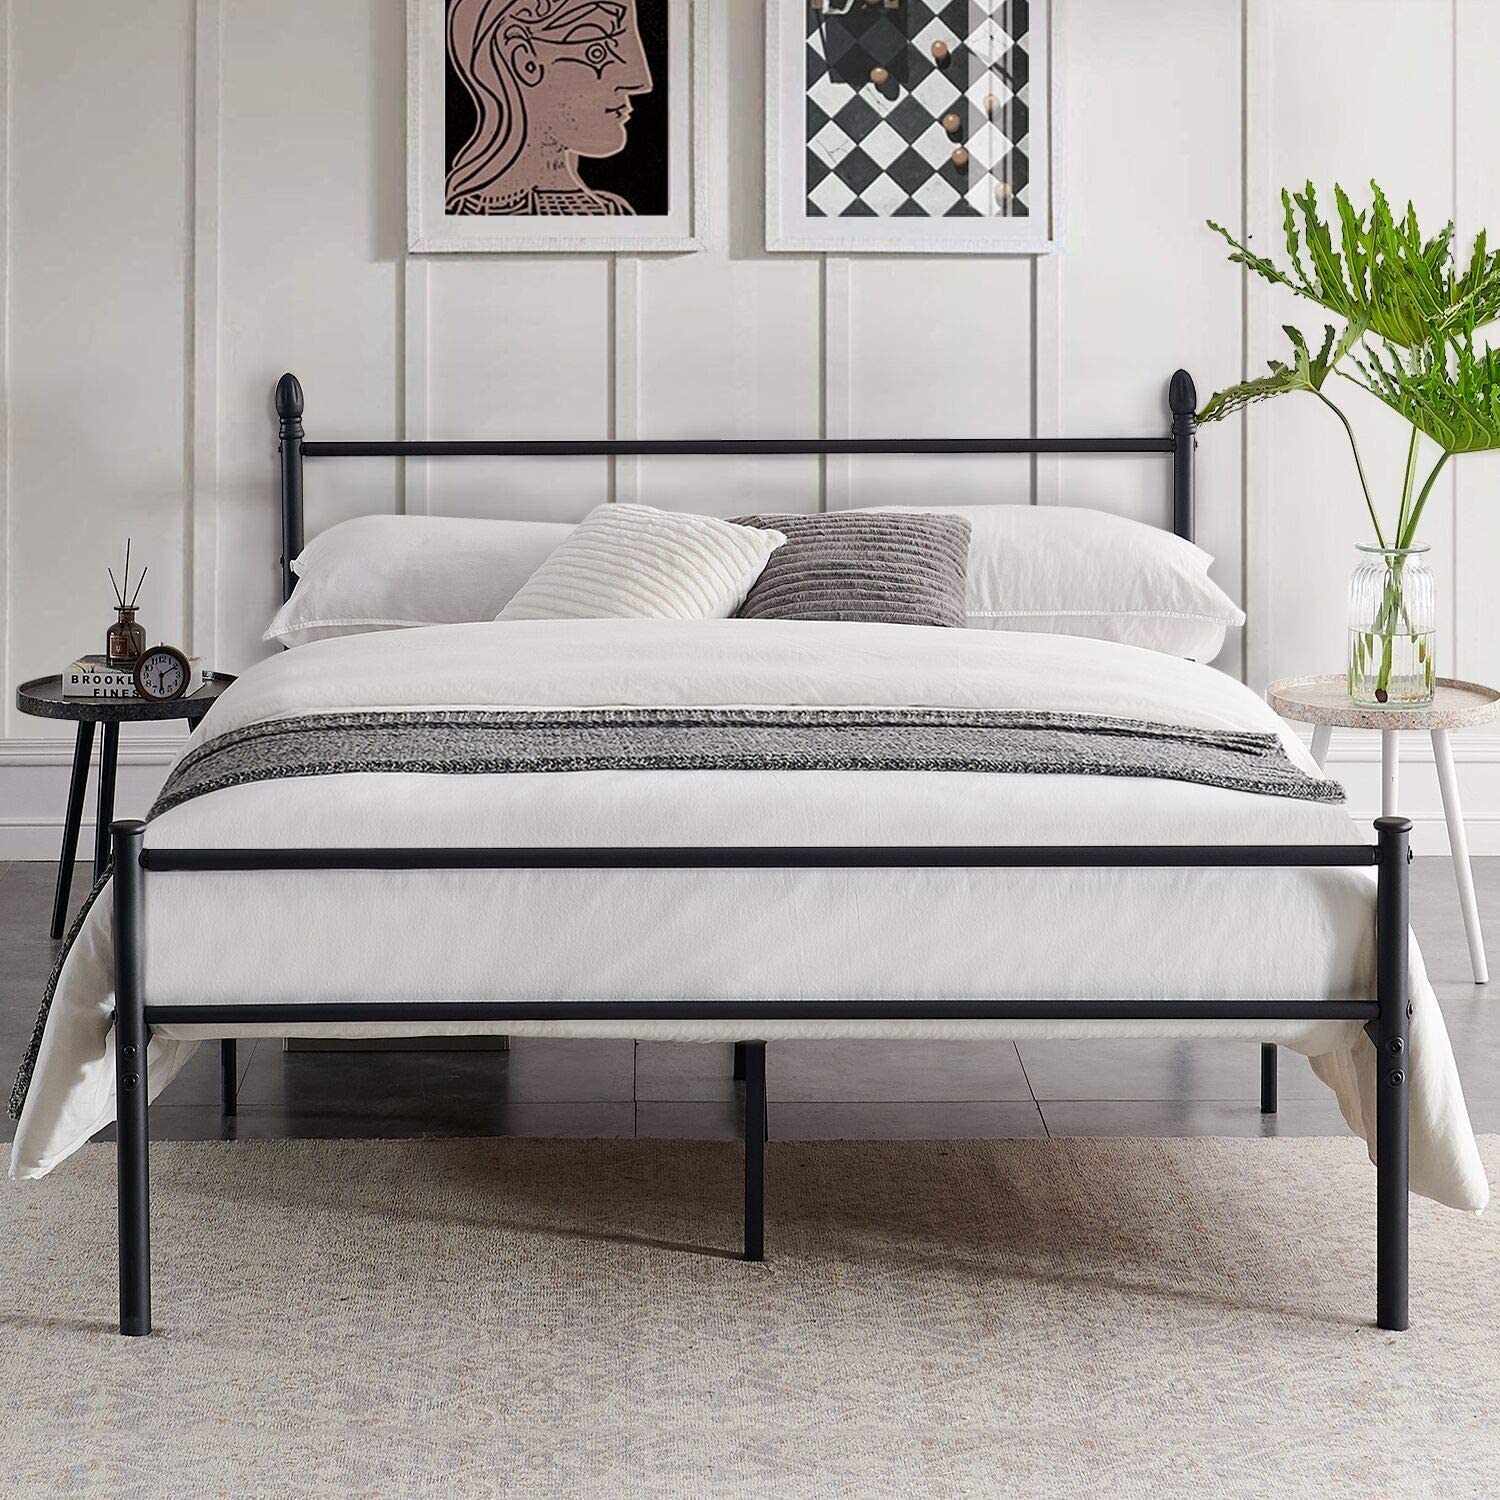 VECELO Reinforced Metal Bed Frame Full Size